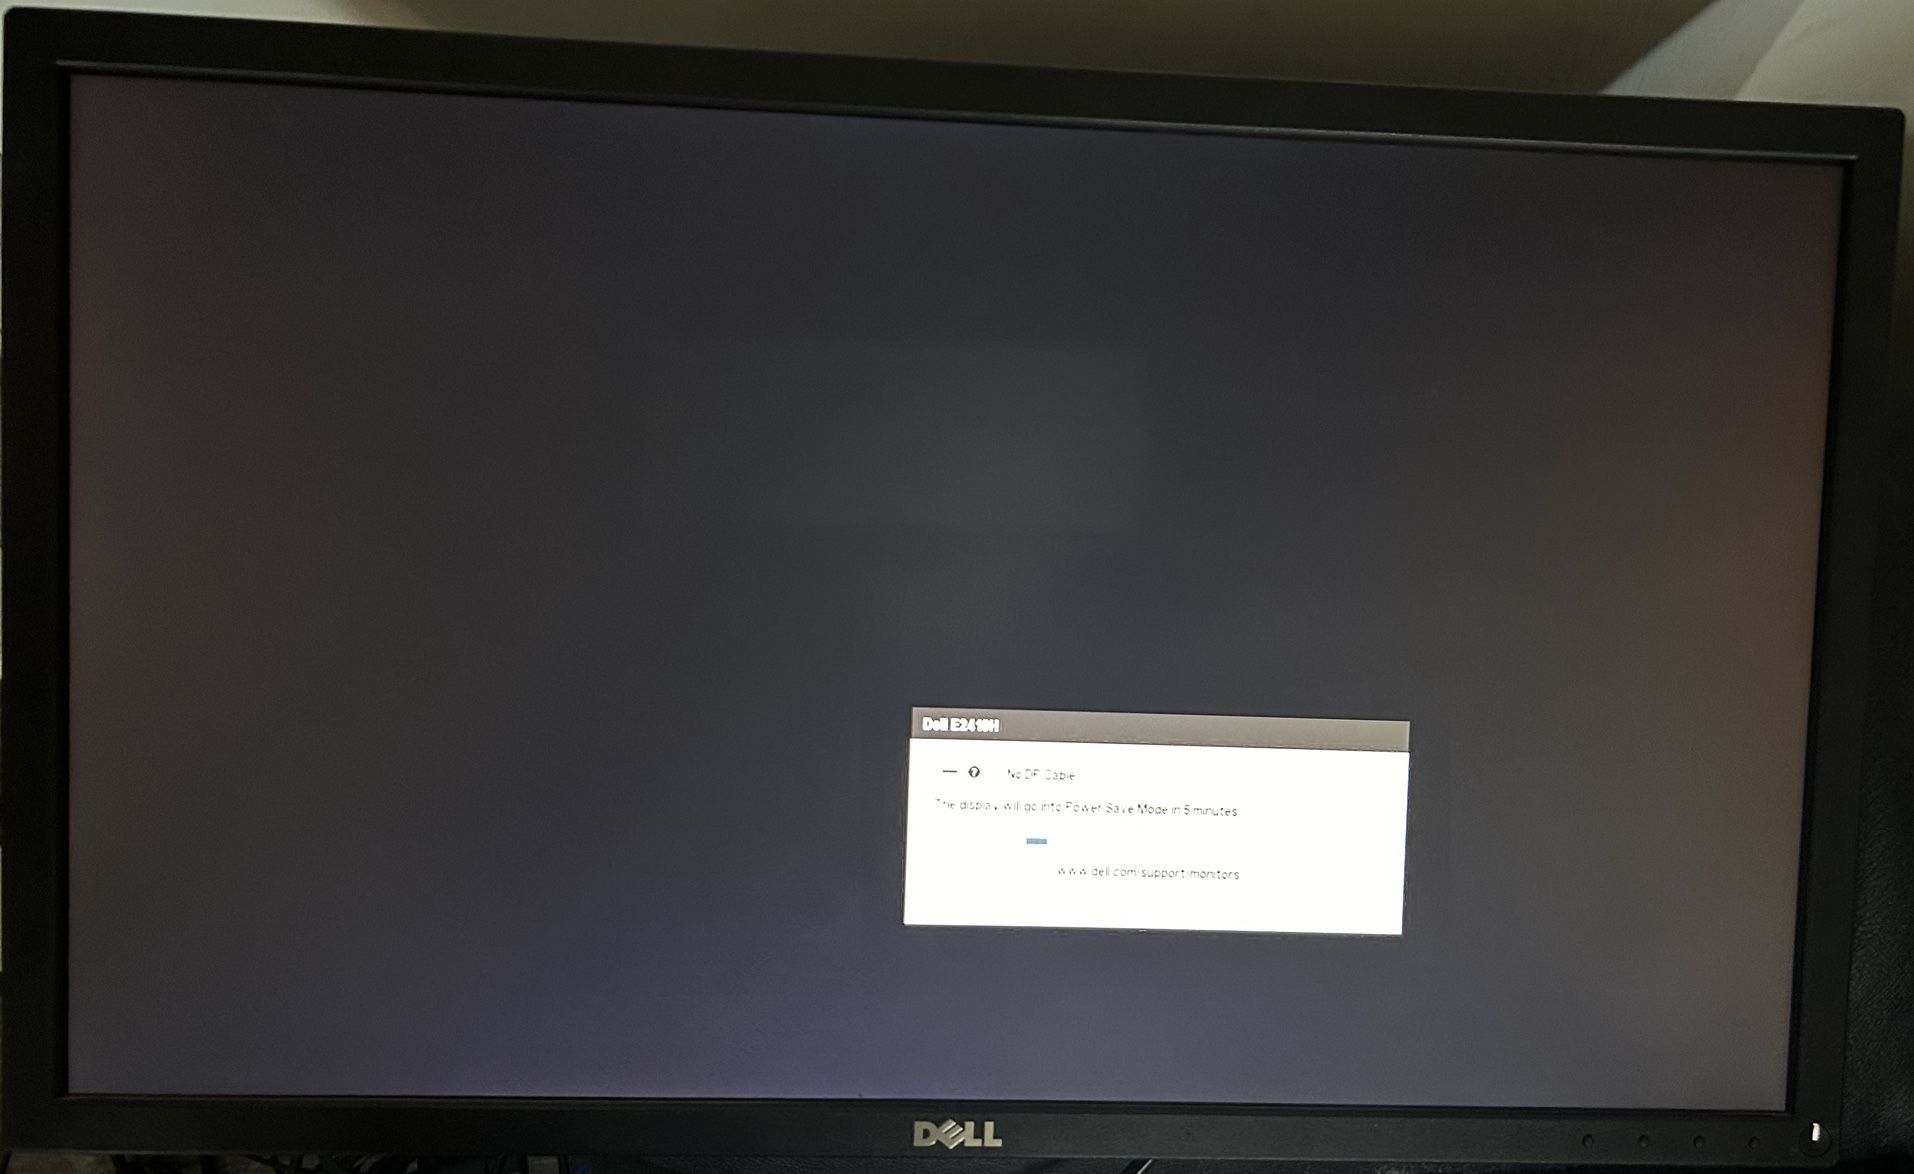 DELL Computer Monitor / Display Screen